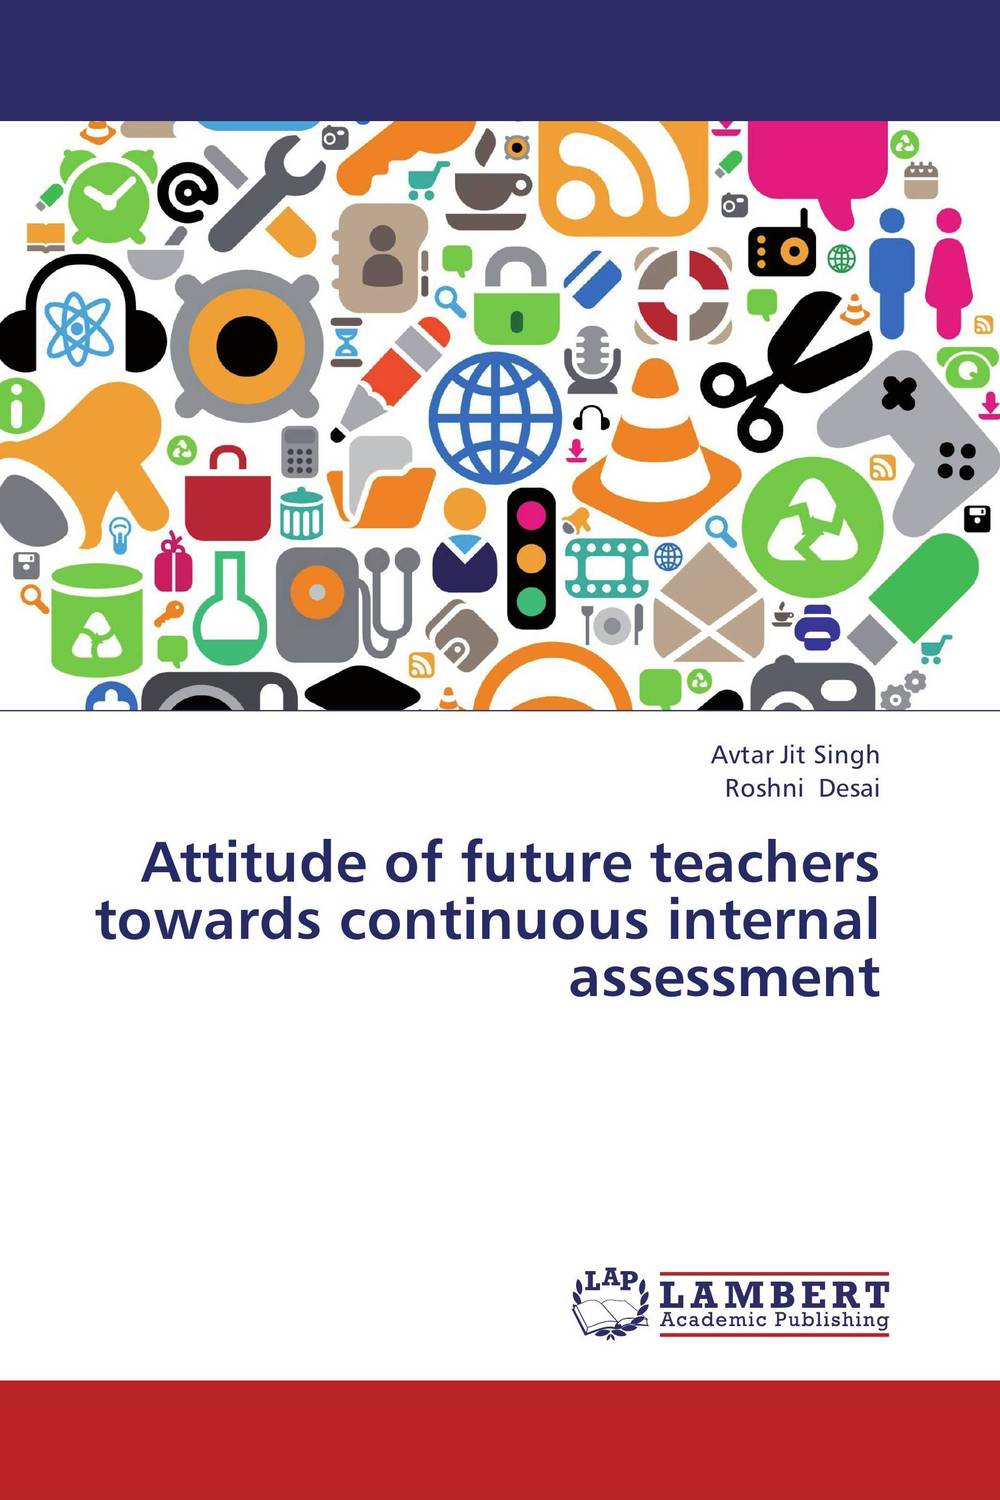 Attitude of future teachers towards continuous internal assessment